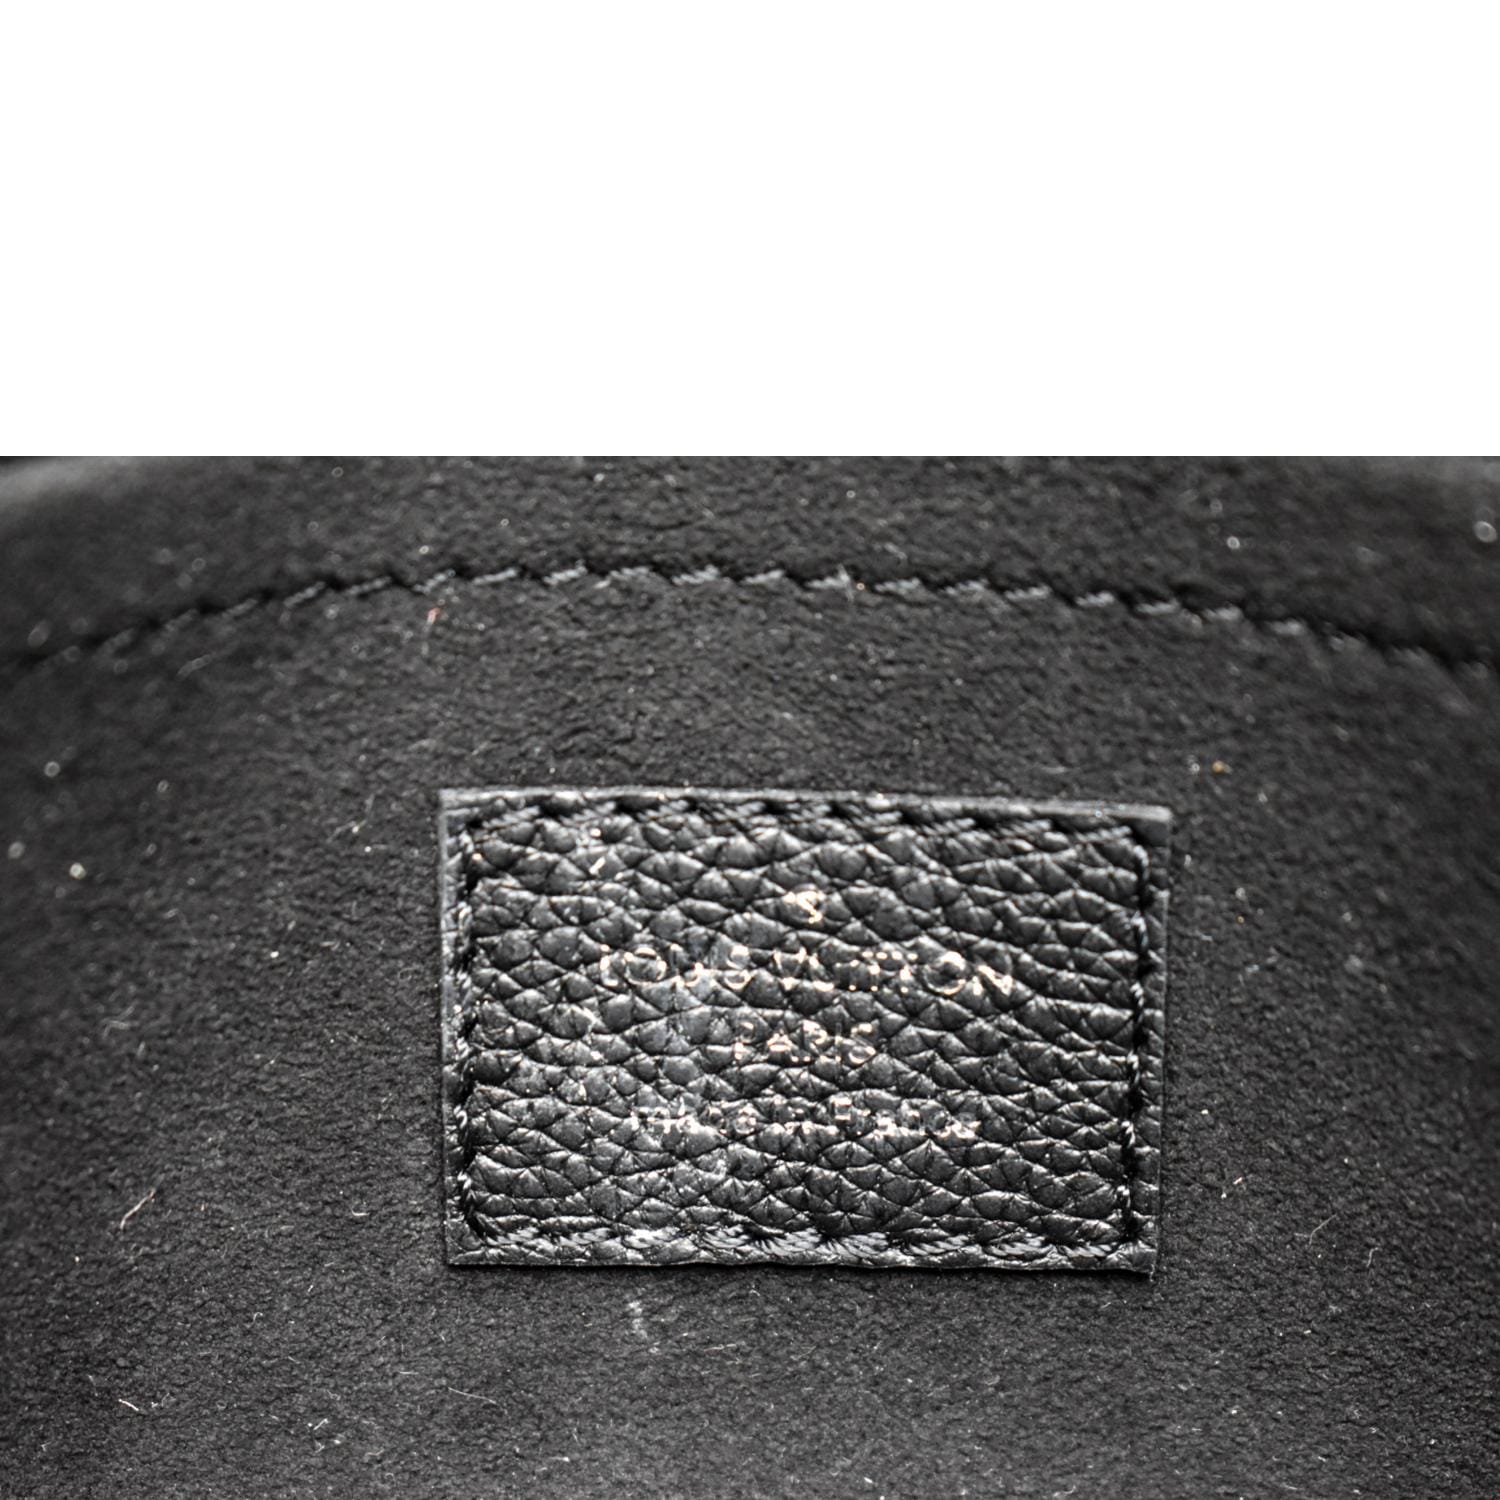 Louis Vuitton Black Calfskin MyLockMe Satchel, myGemma